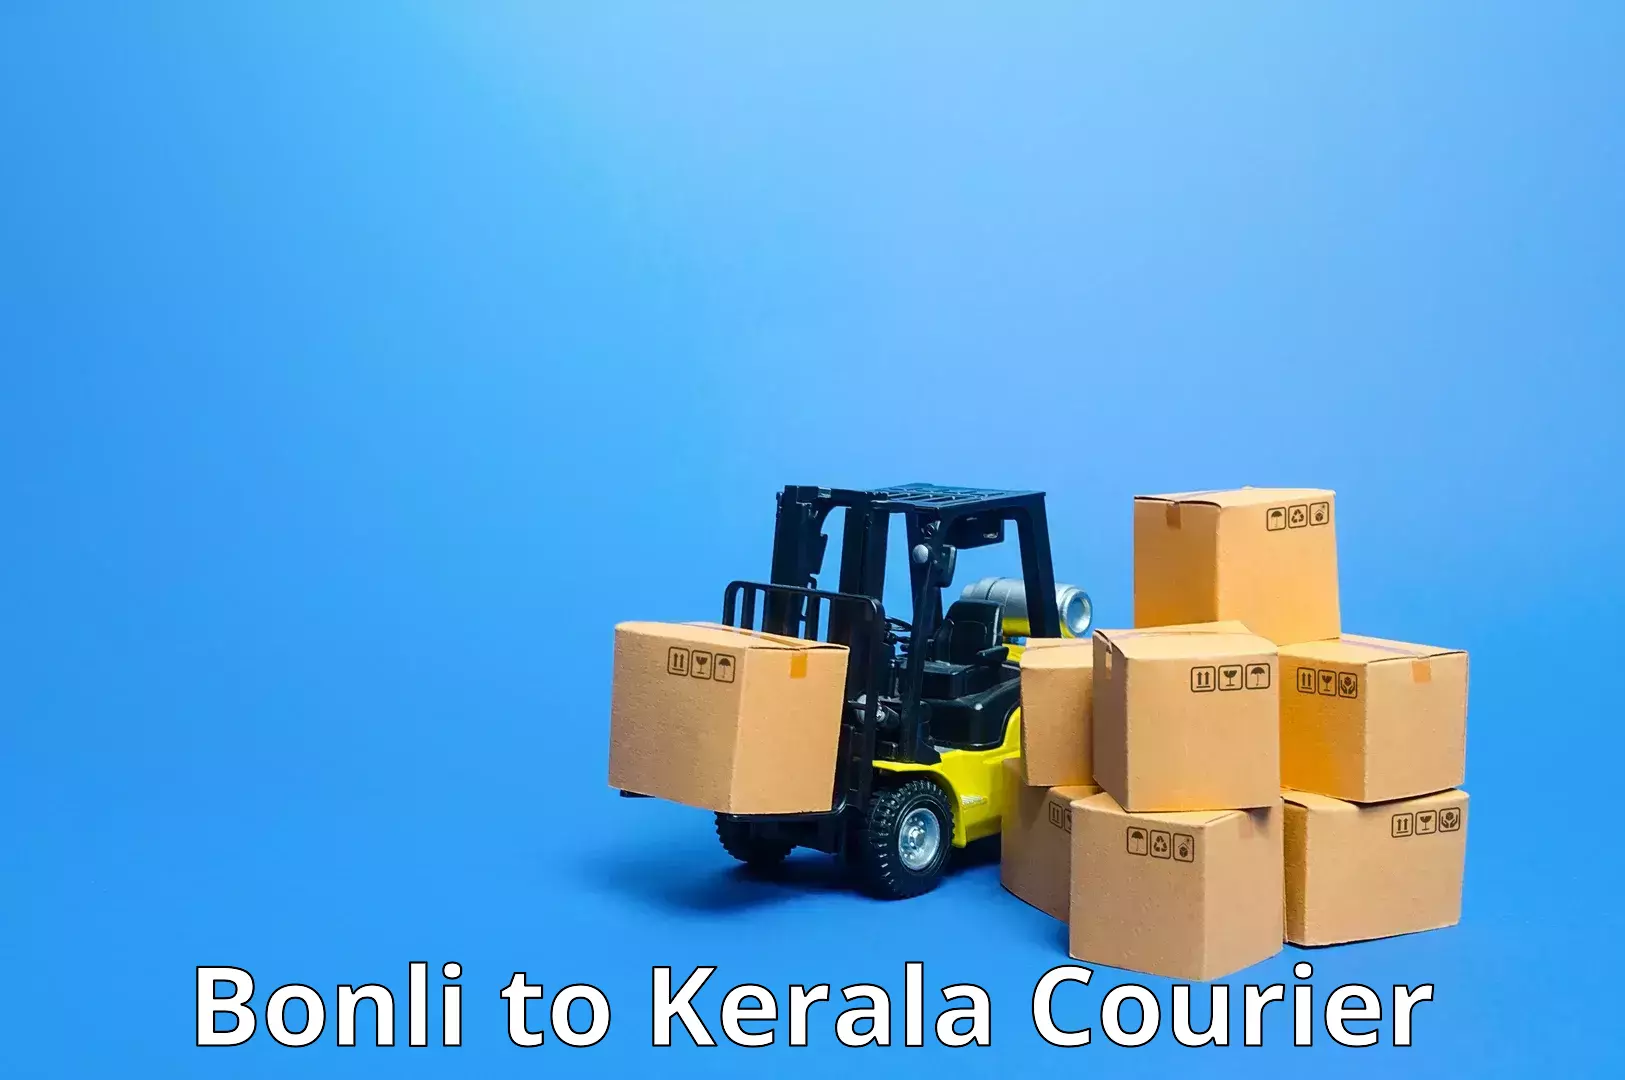 Reliable package handling Bonli to Kerala